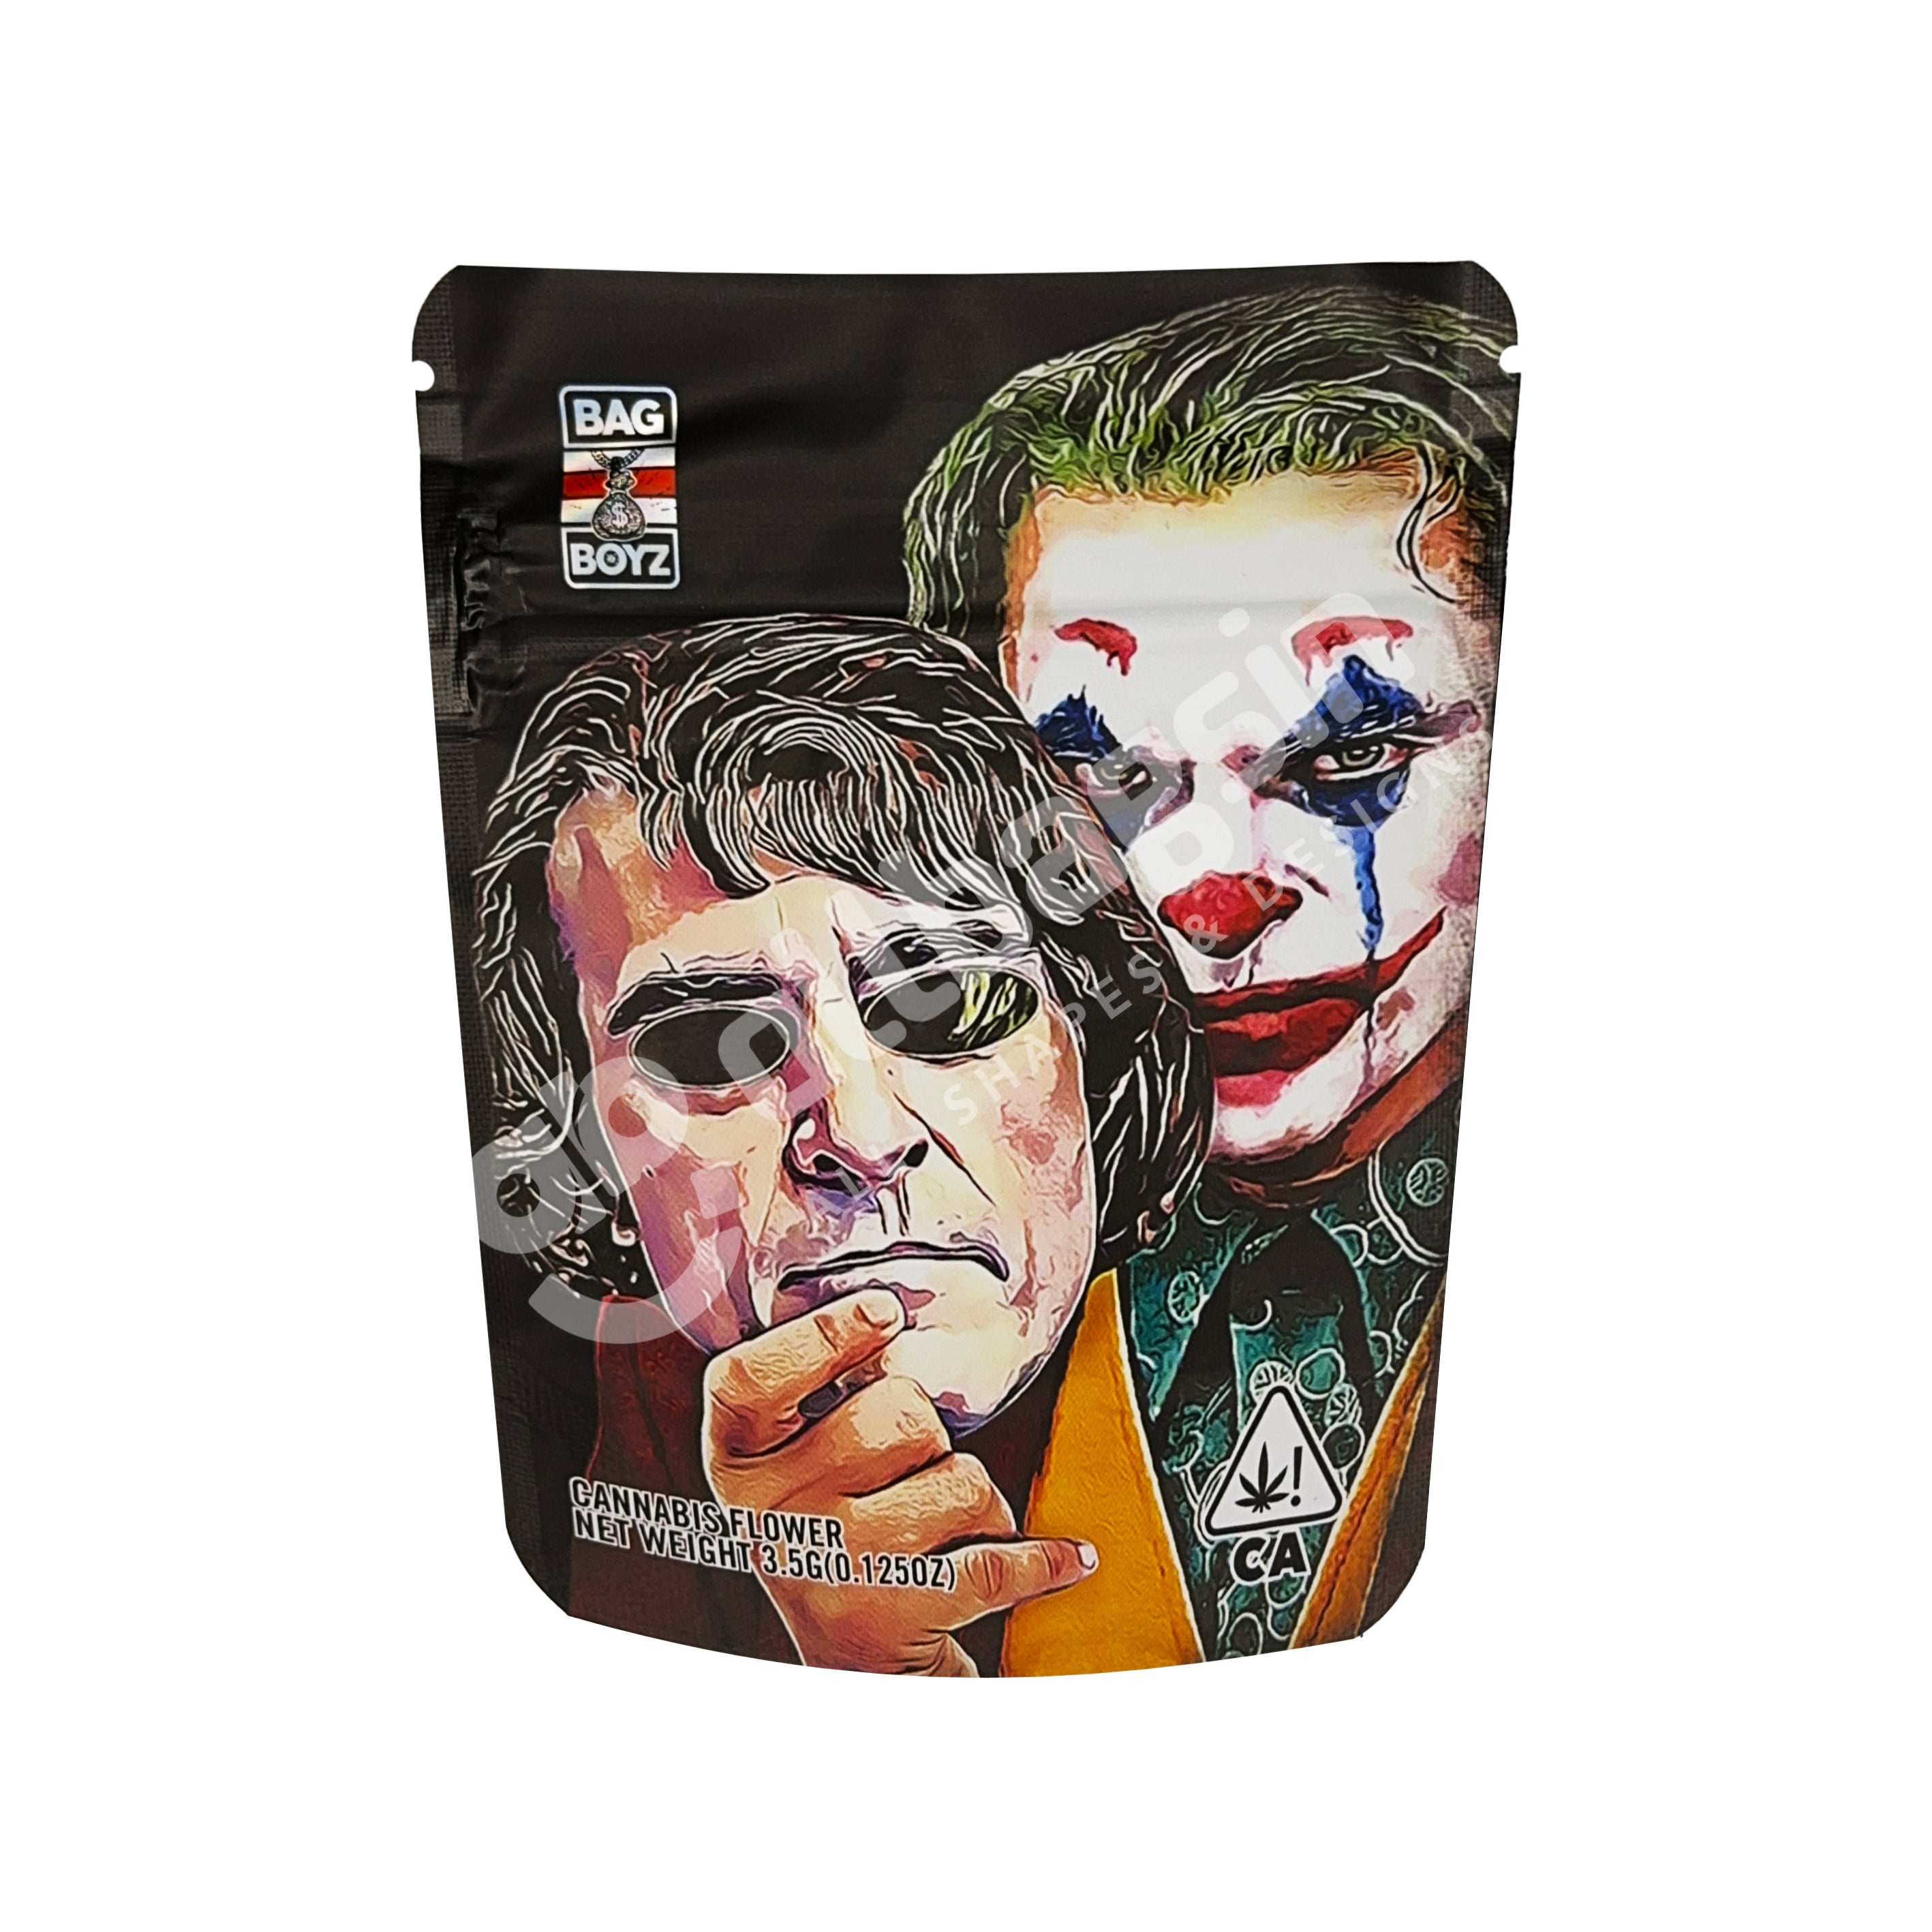 Joker Bag Boys 3.5g Mylar Bag